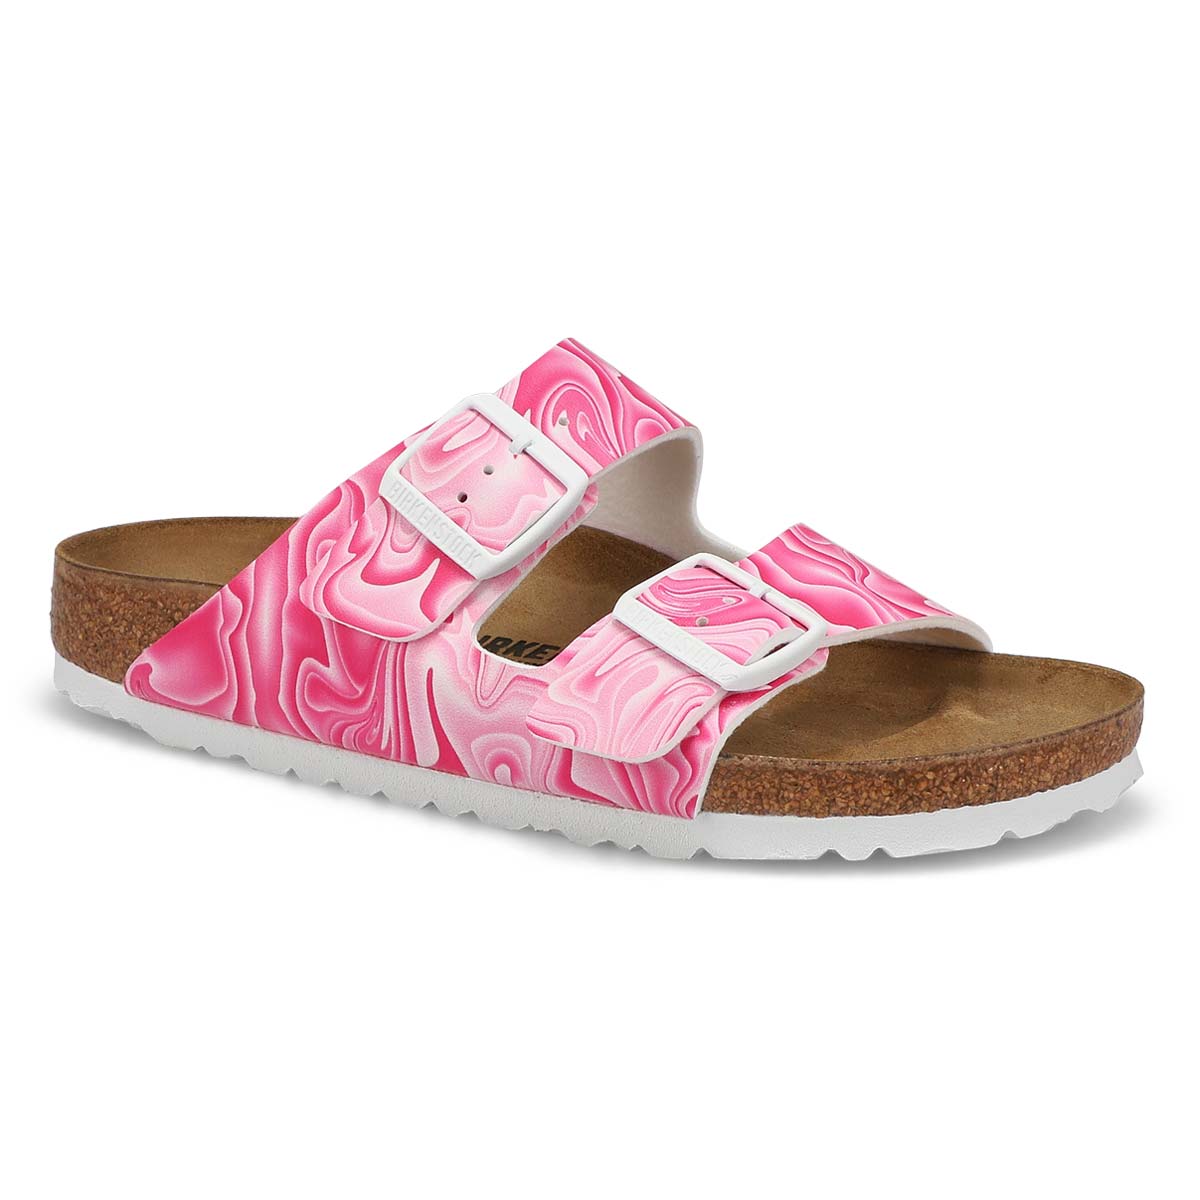 Women's Arizona Birko-Flor Narrow Sandal - Pink/White